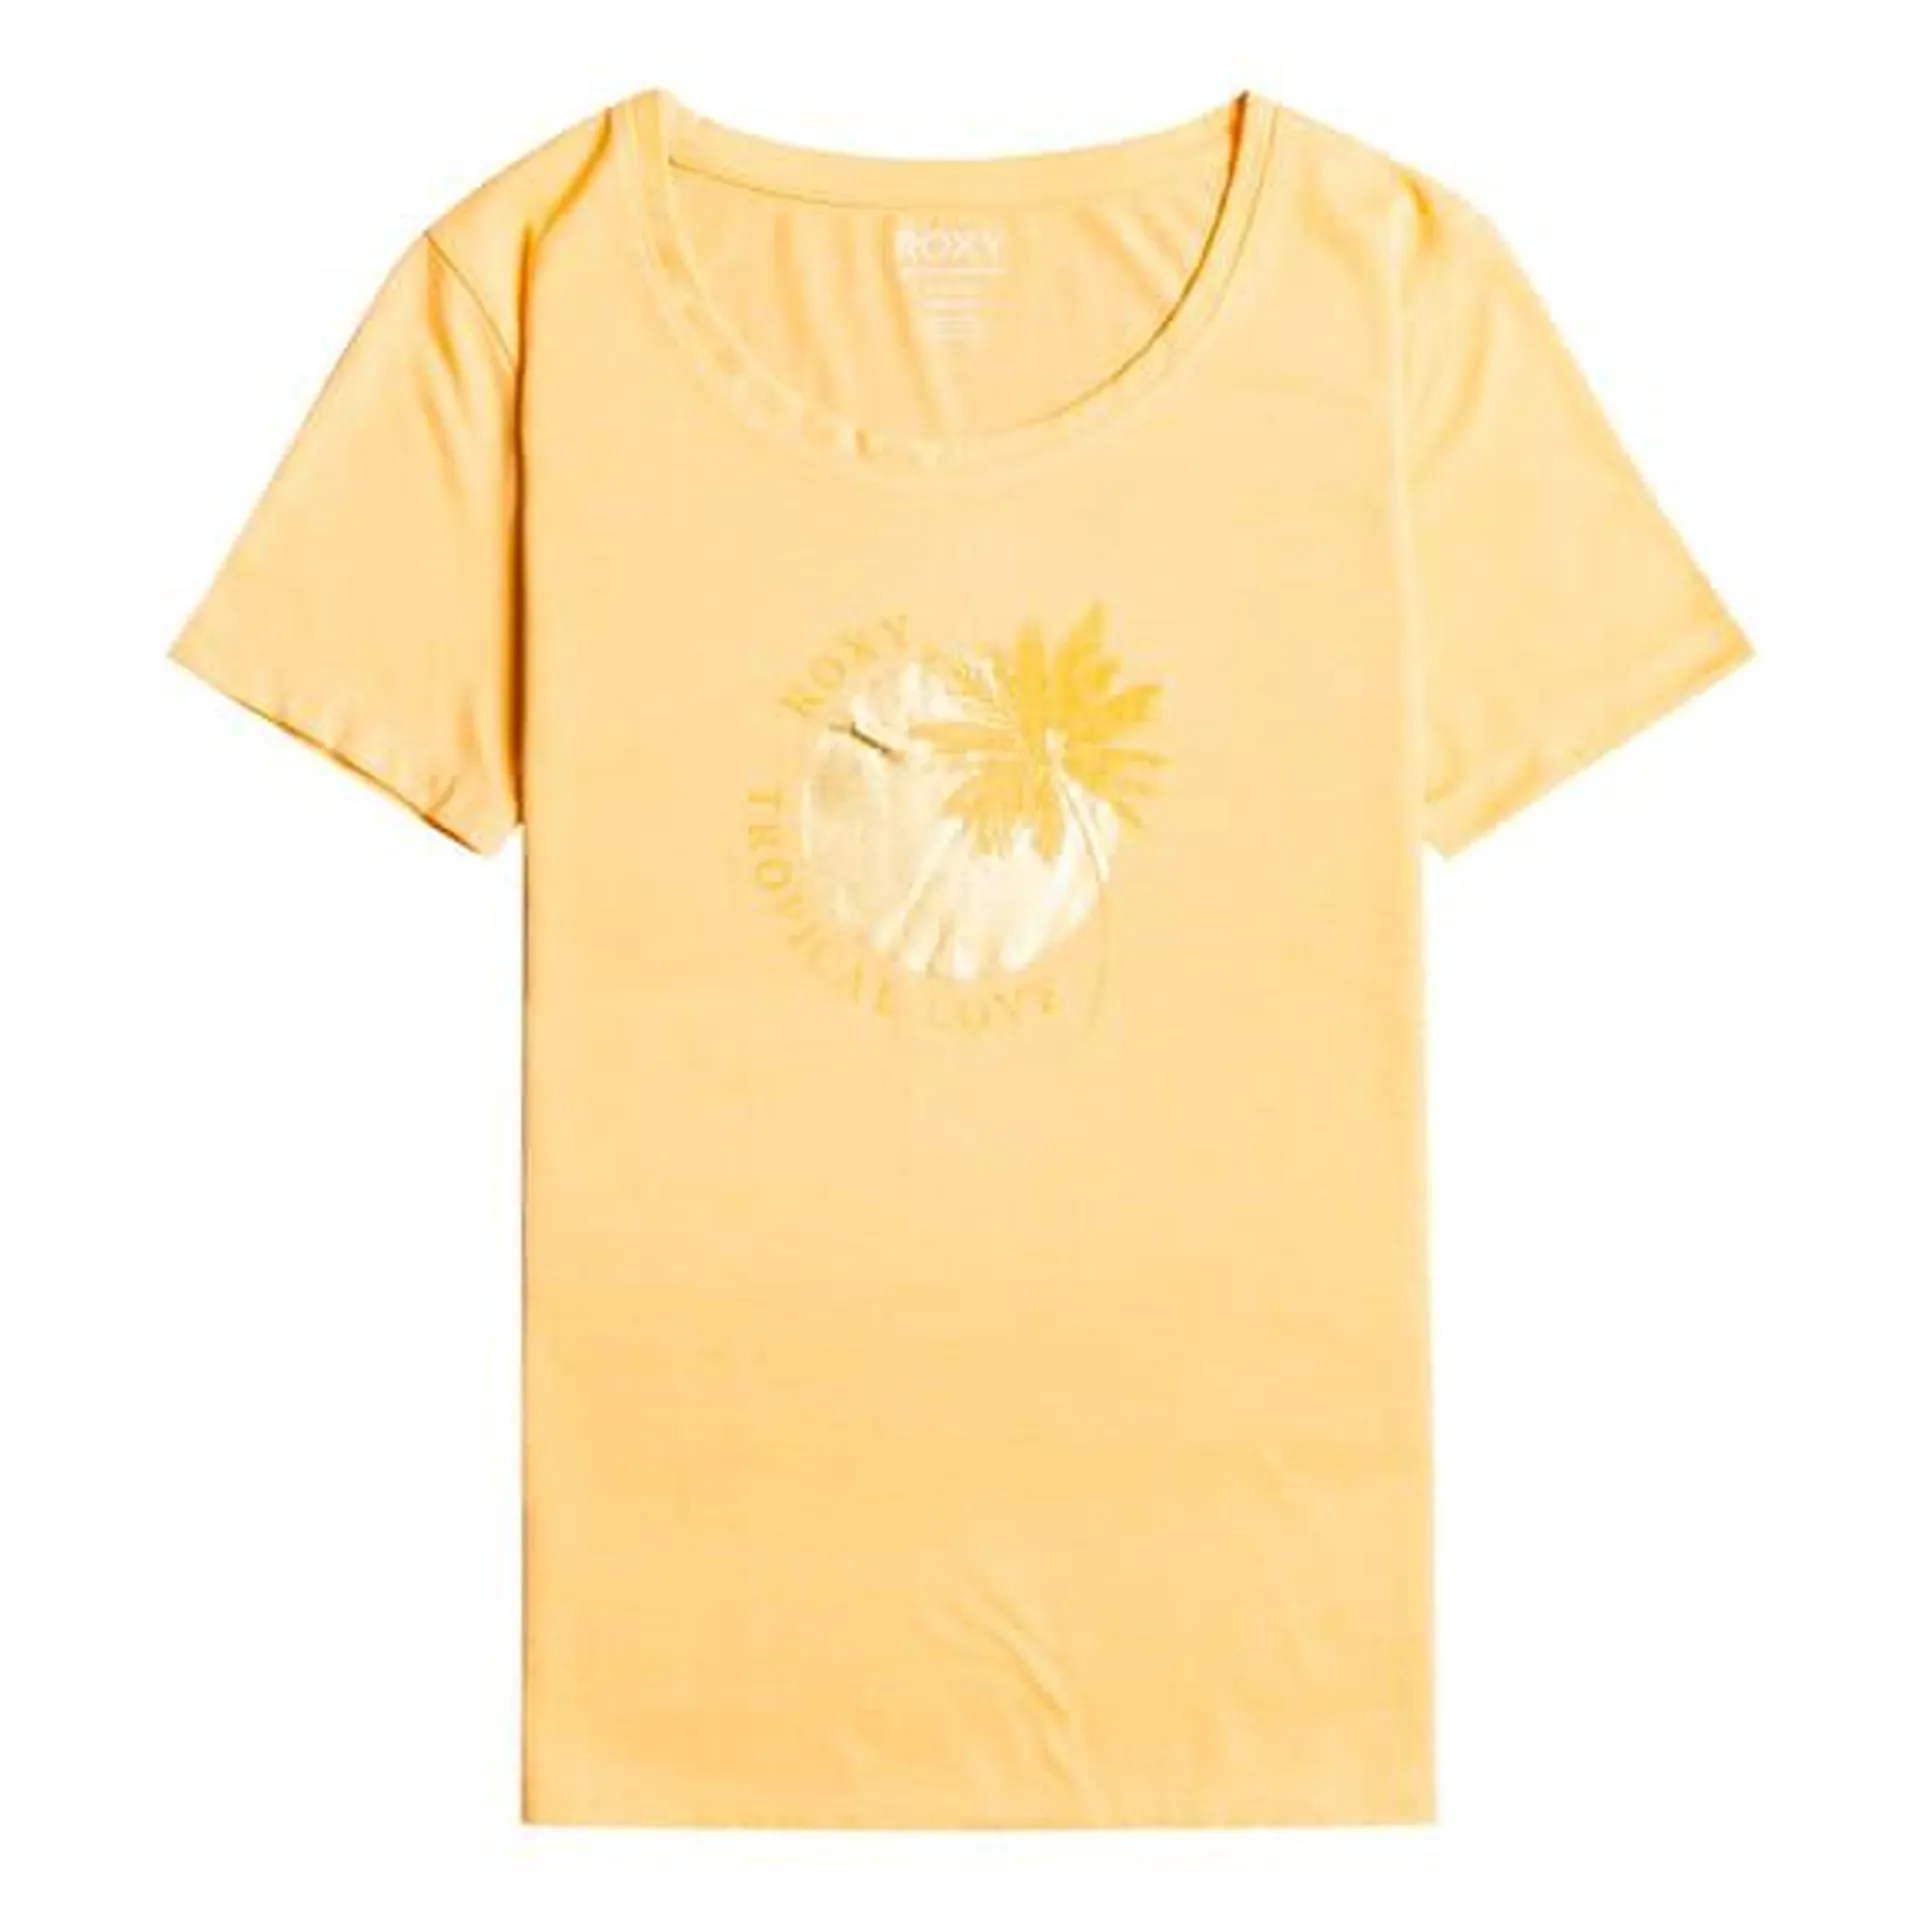 T-shirt Roxy Chasing The Wave manche courte jaune clair femme